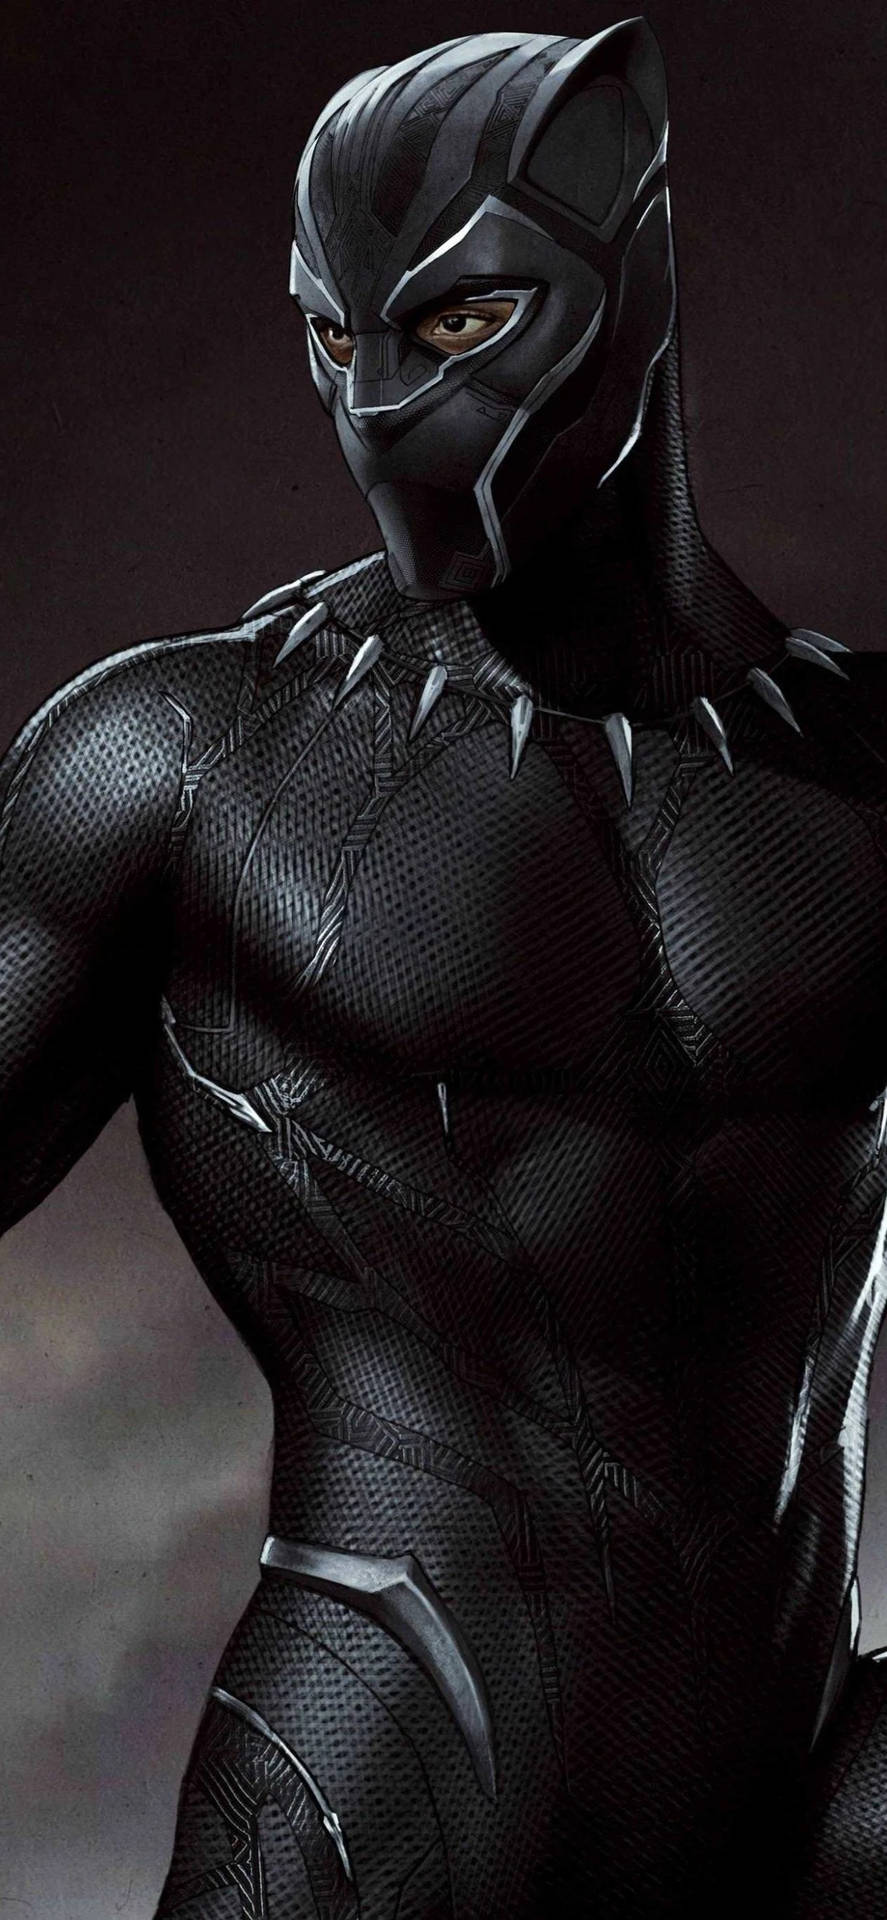 Black Panther Superhero 2018 Marvel Movie Background